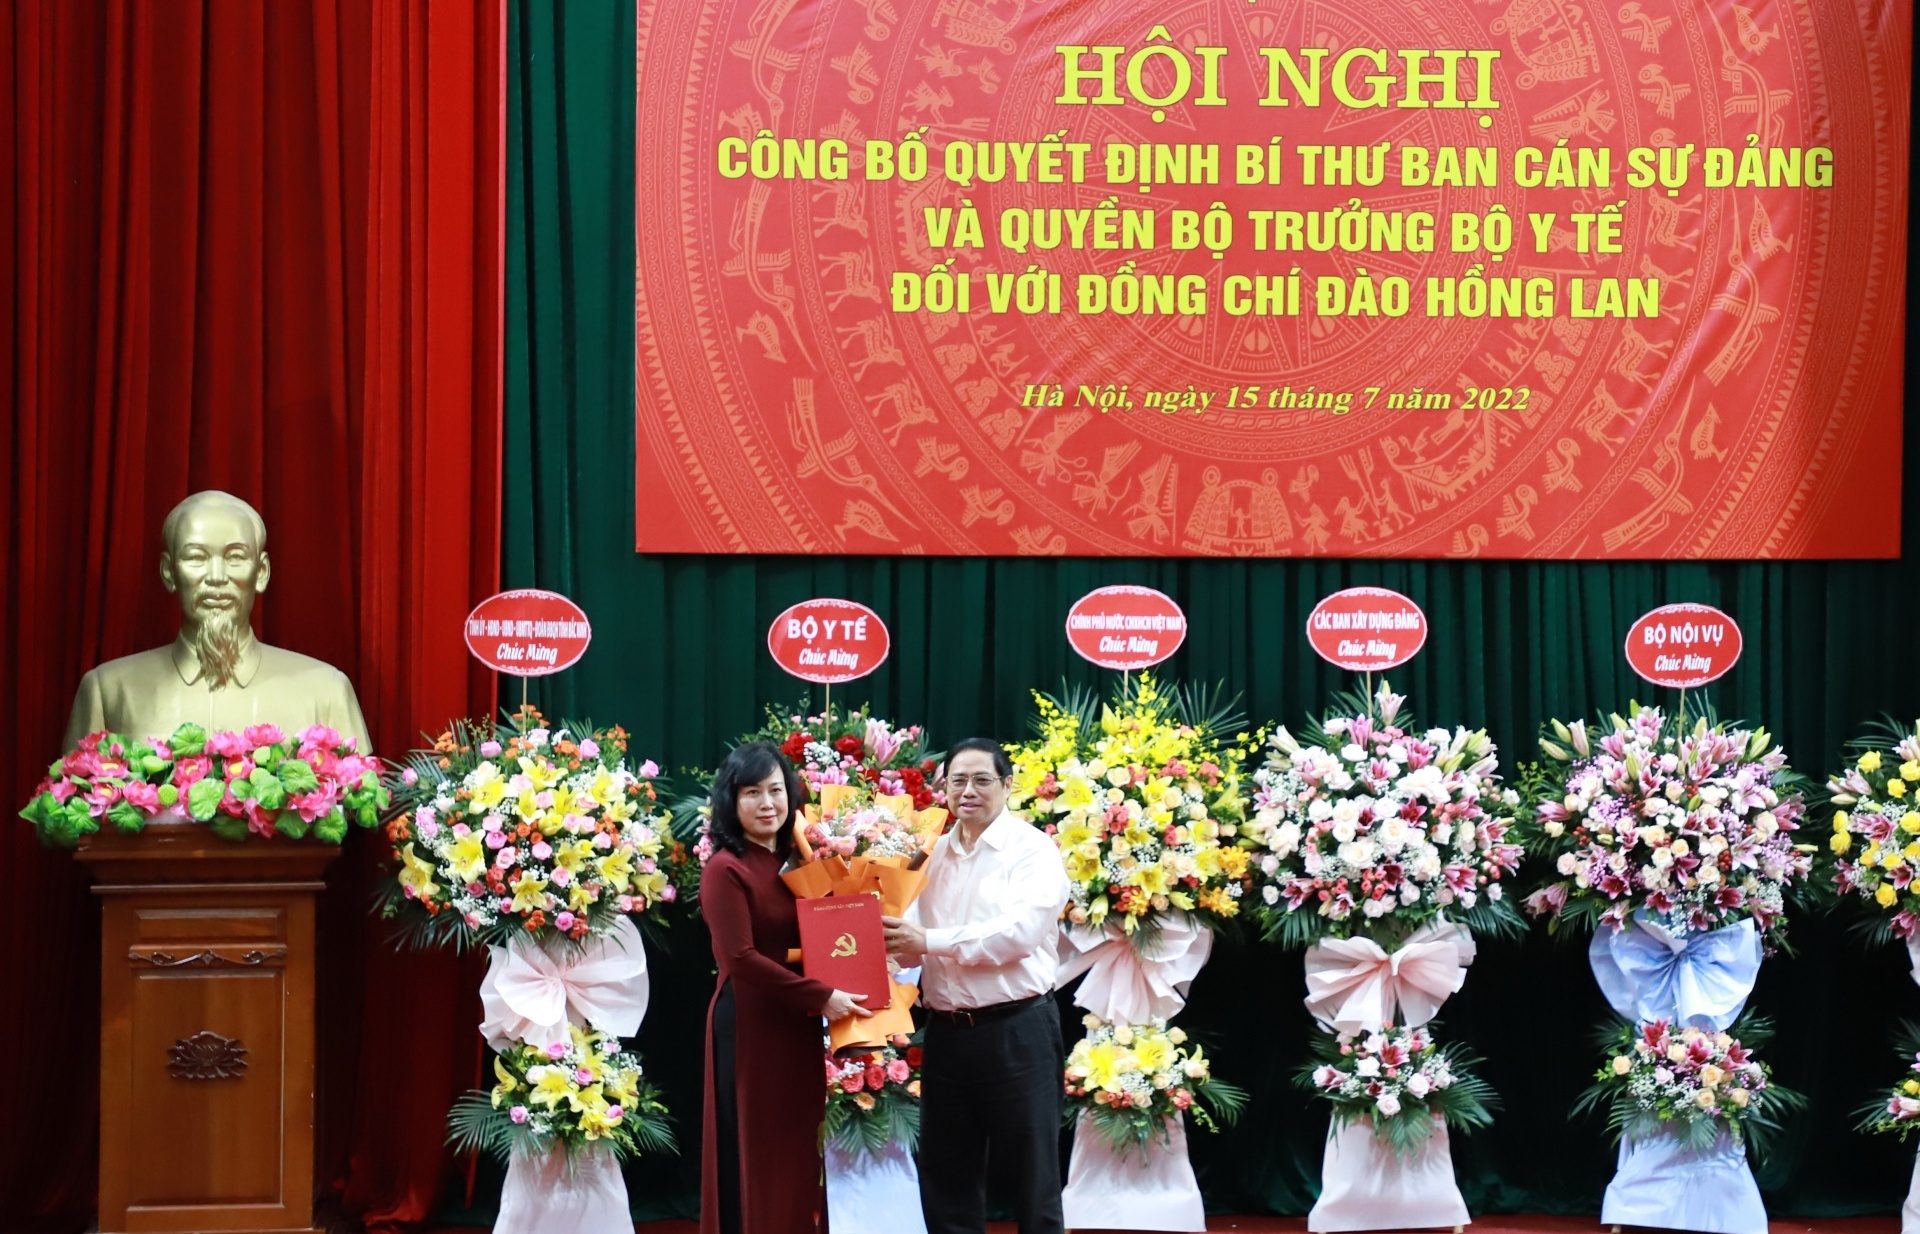 dao hong lan becomes vietnams new health minister